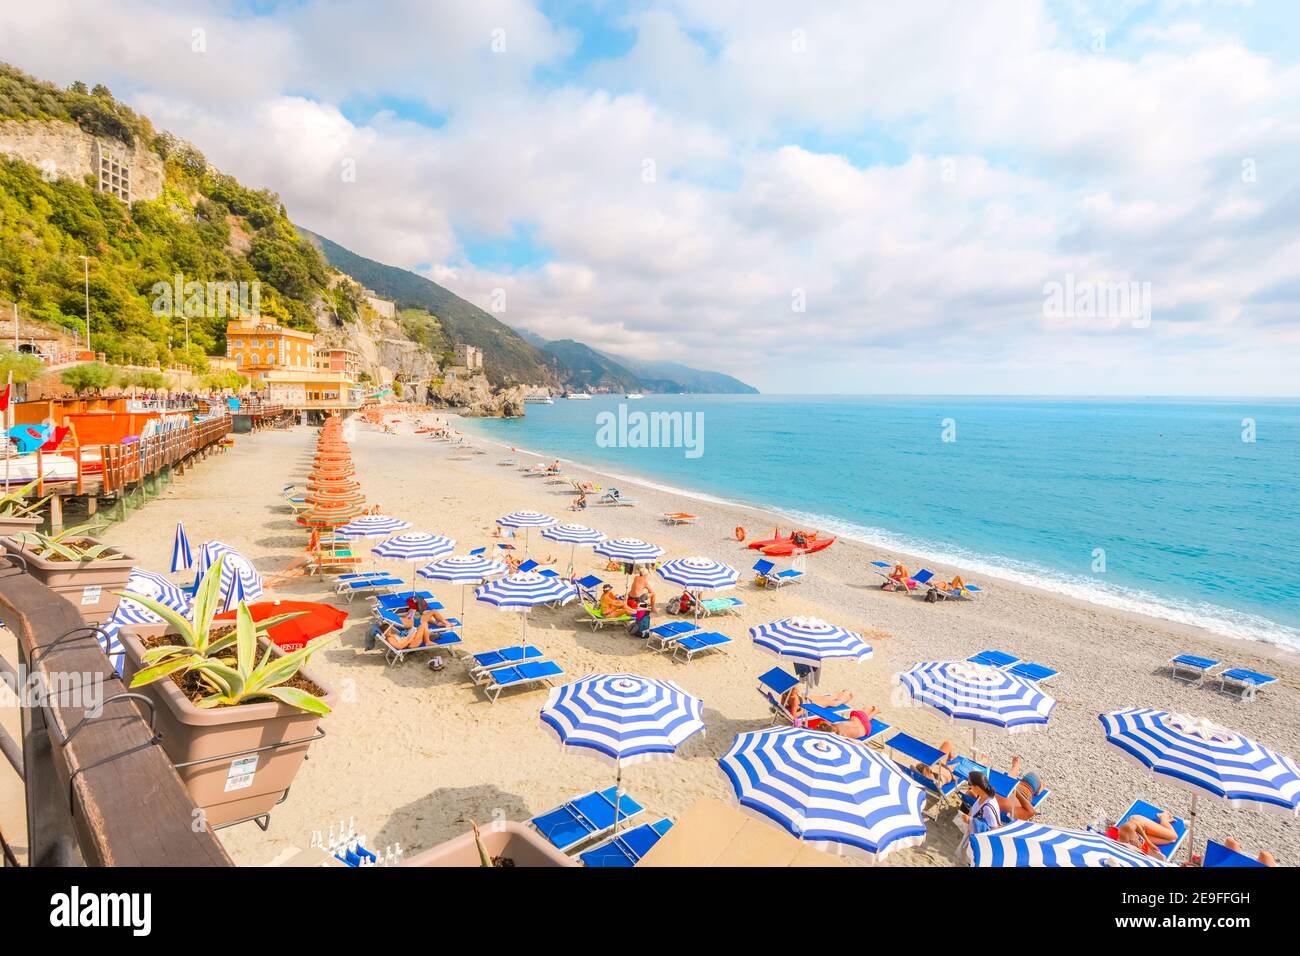 The sea and sandy beach Spiaggia di Fegina at the Cinque Terre Italy resort village of Monterosso al Mare with tourists enjoying the Italian Riviera Stock Photo